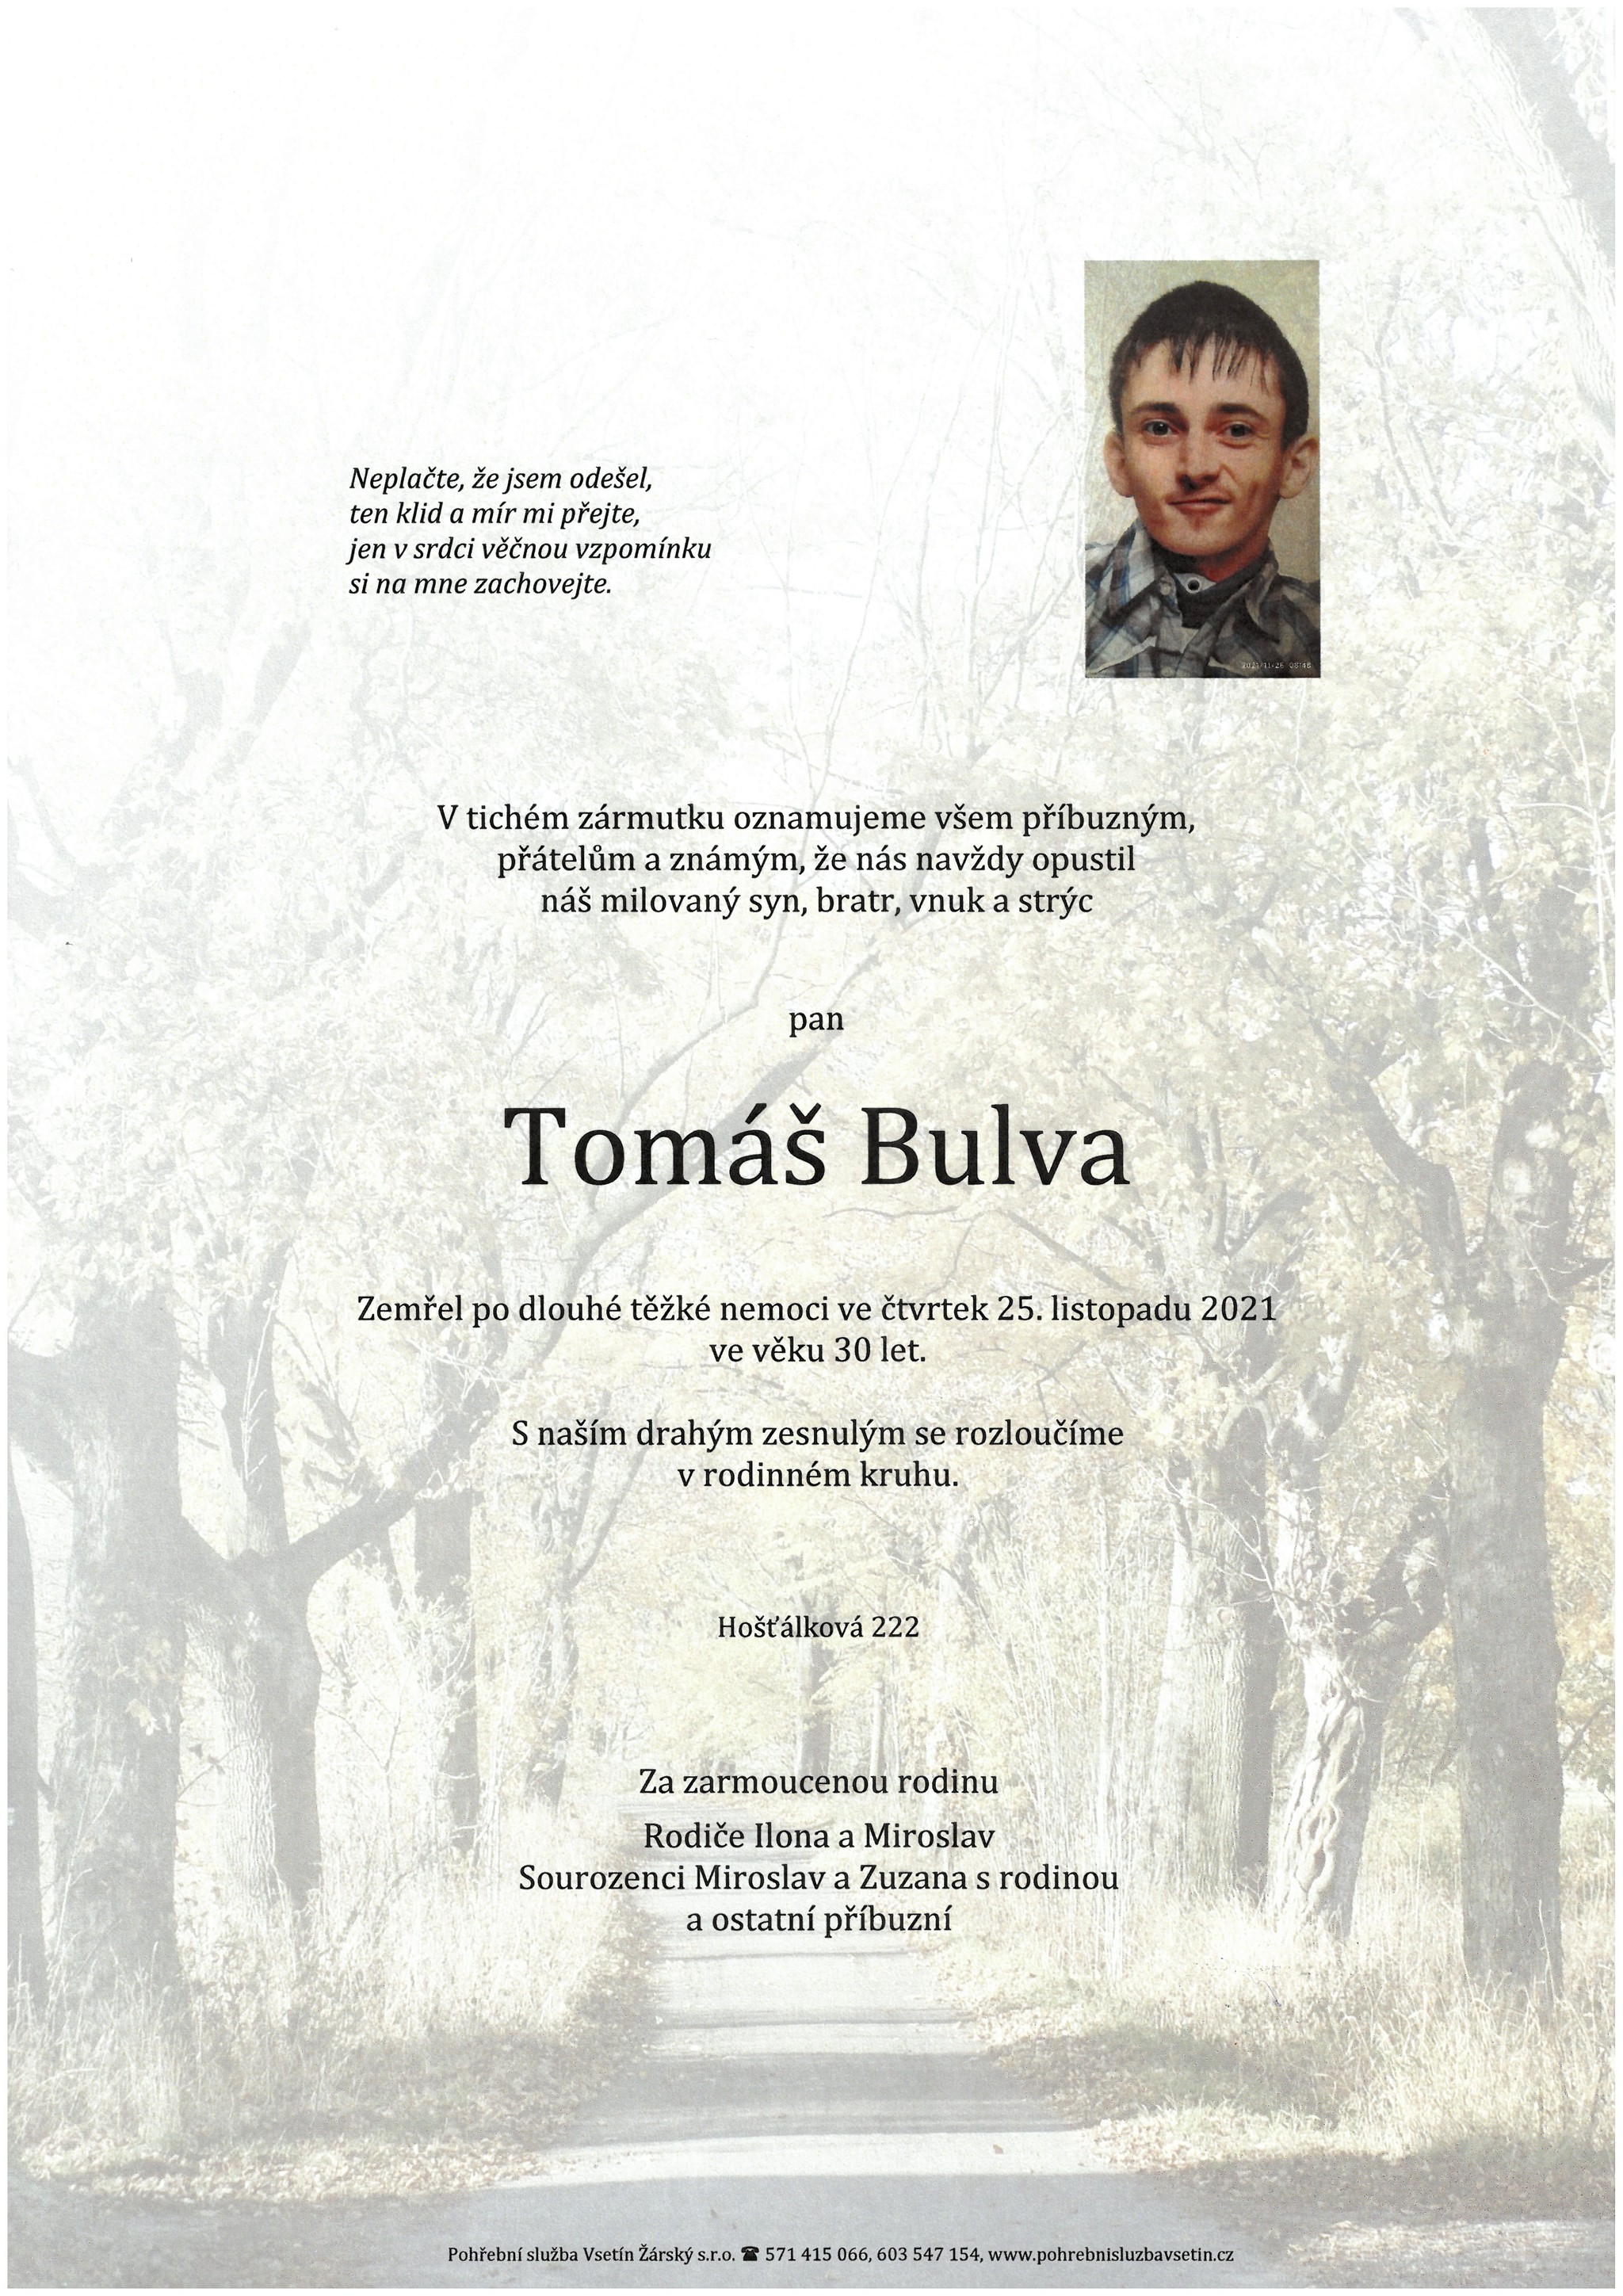 Tomáš Bulva